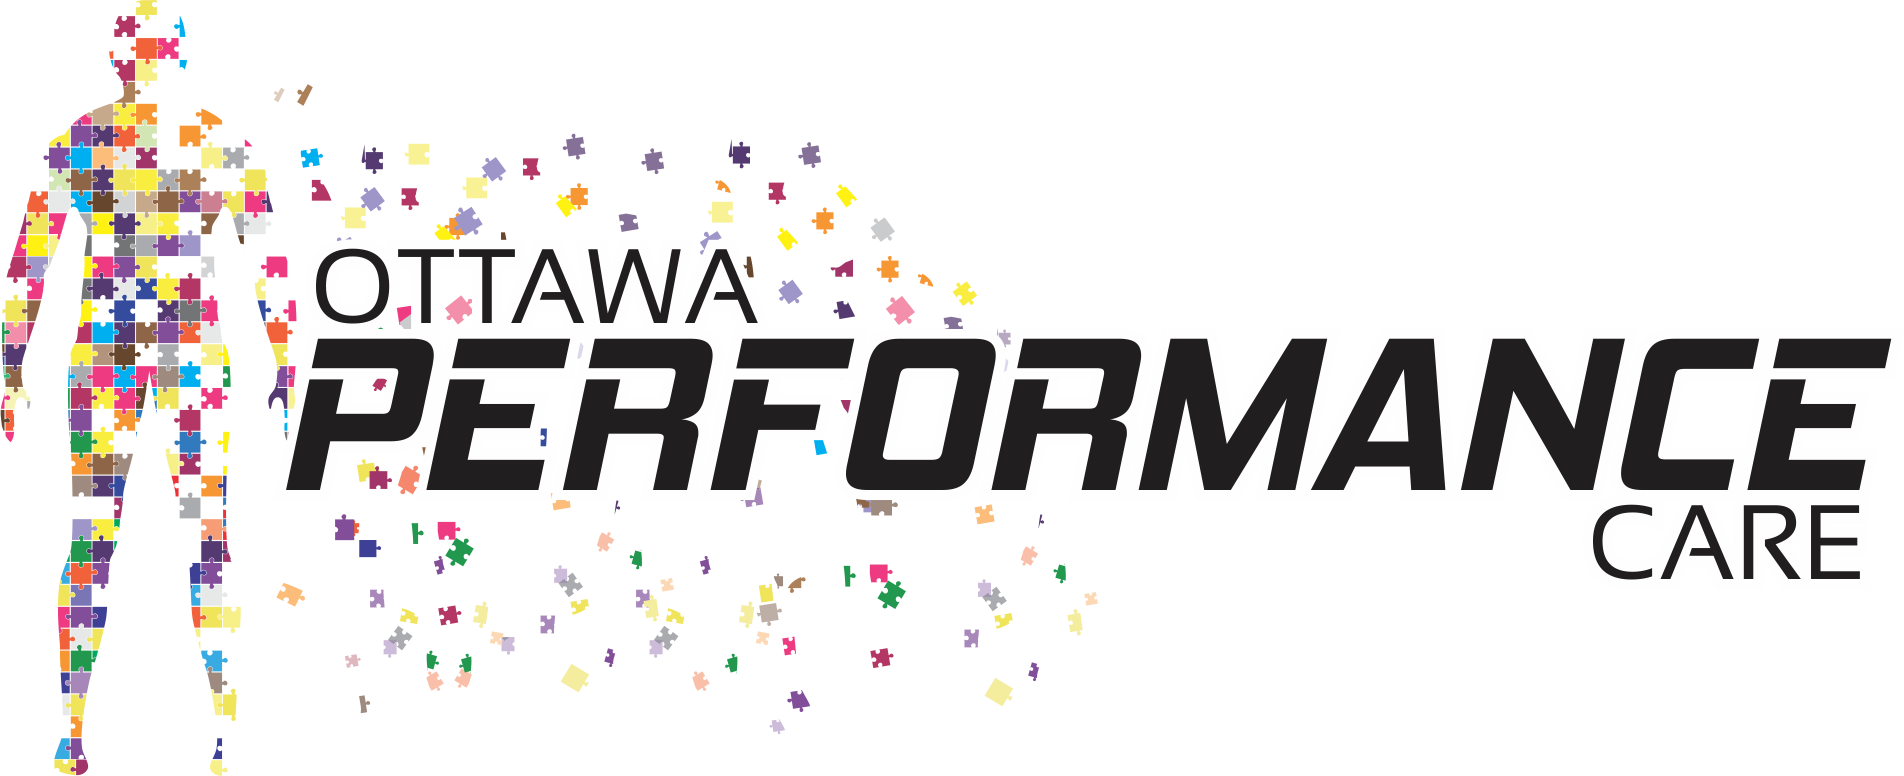 Ottawa Performance Care Logo